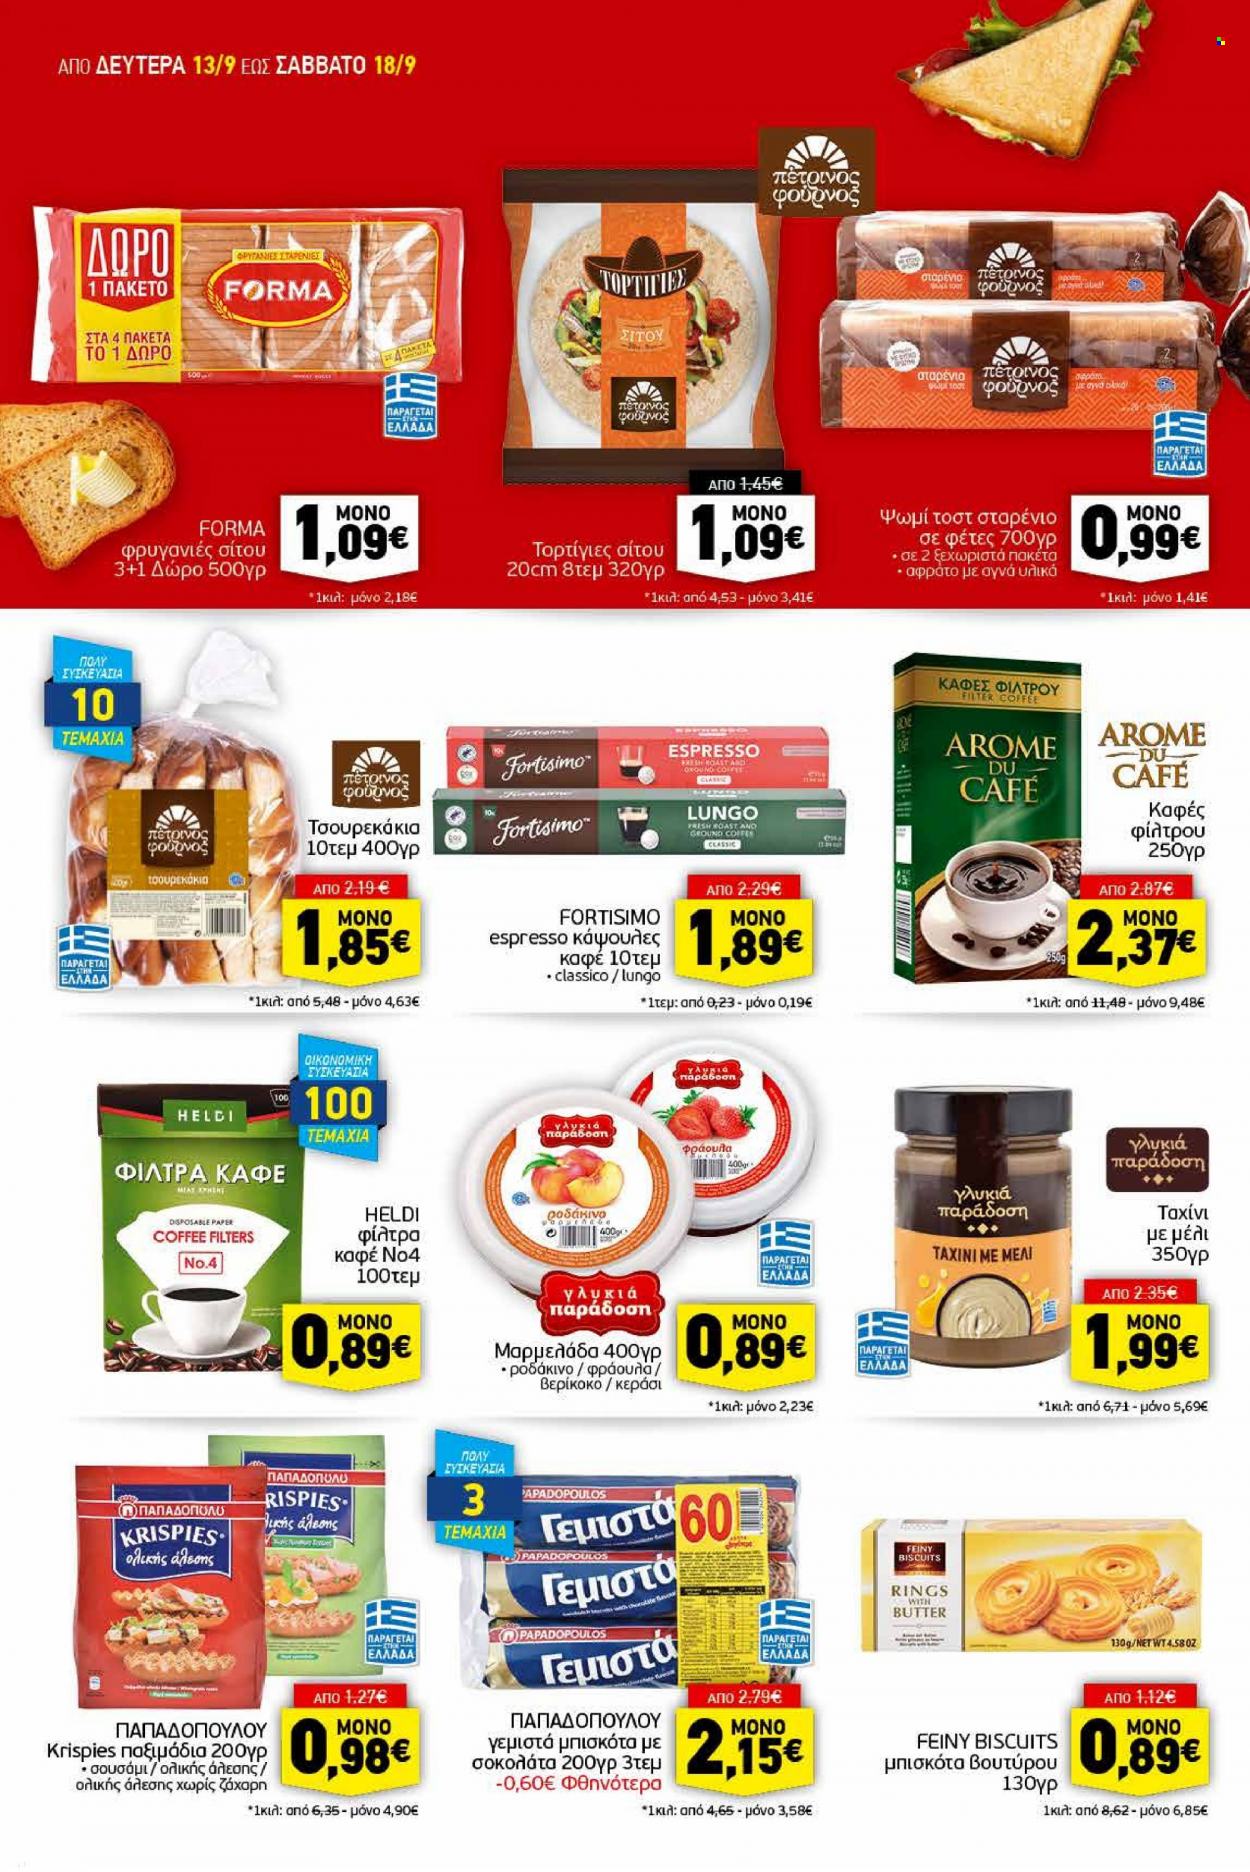 thumbnail - Φυλλάδια Discount Markt - 13.09.2021 - 18.09.2021 - Εκπτωτικά προϊόντα - μπισκότα, σοκολάτα, ζάχαρη, μαρμελάδα, μέλι, καφές. Σελίδα 8.